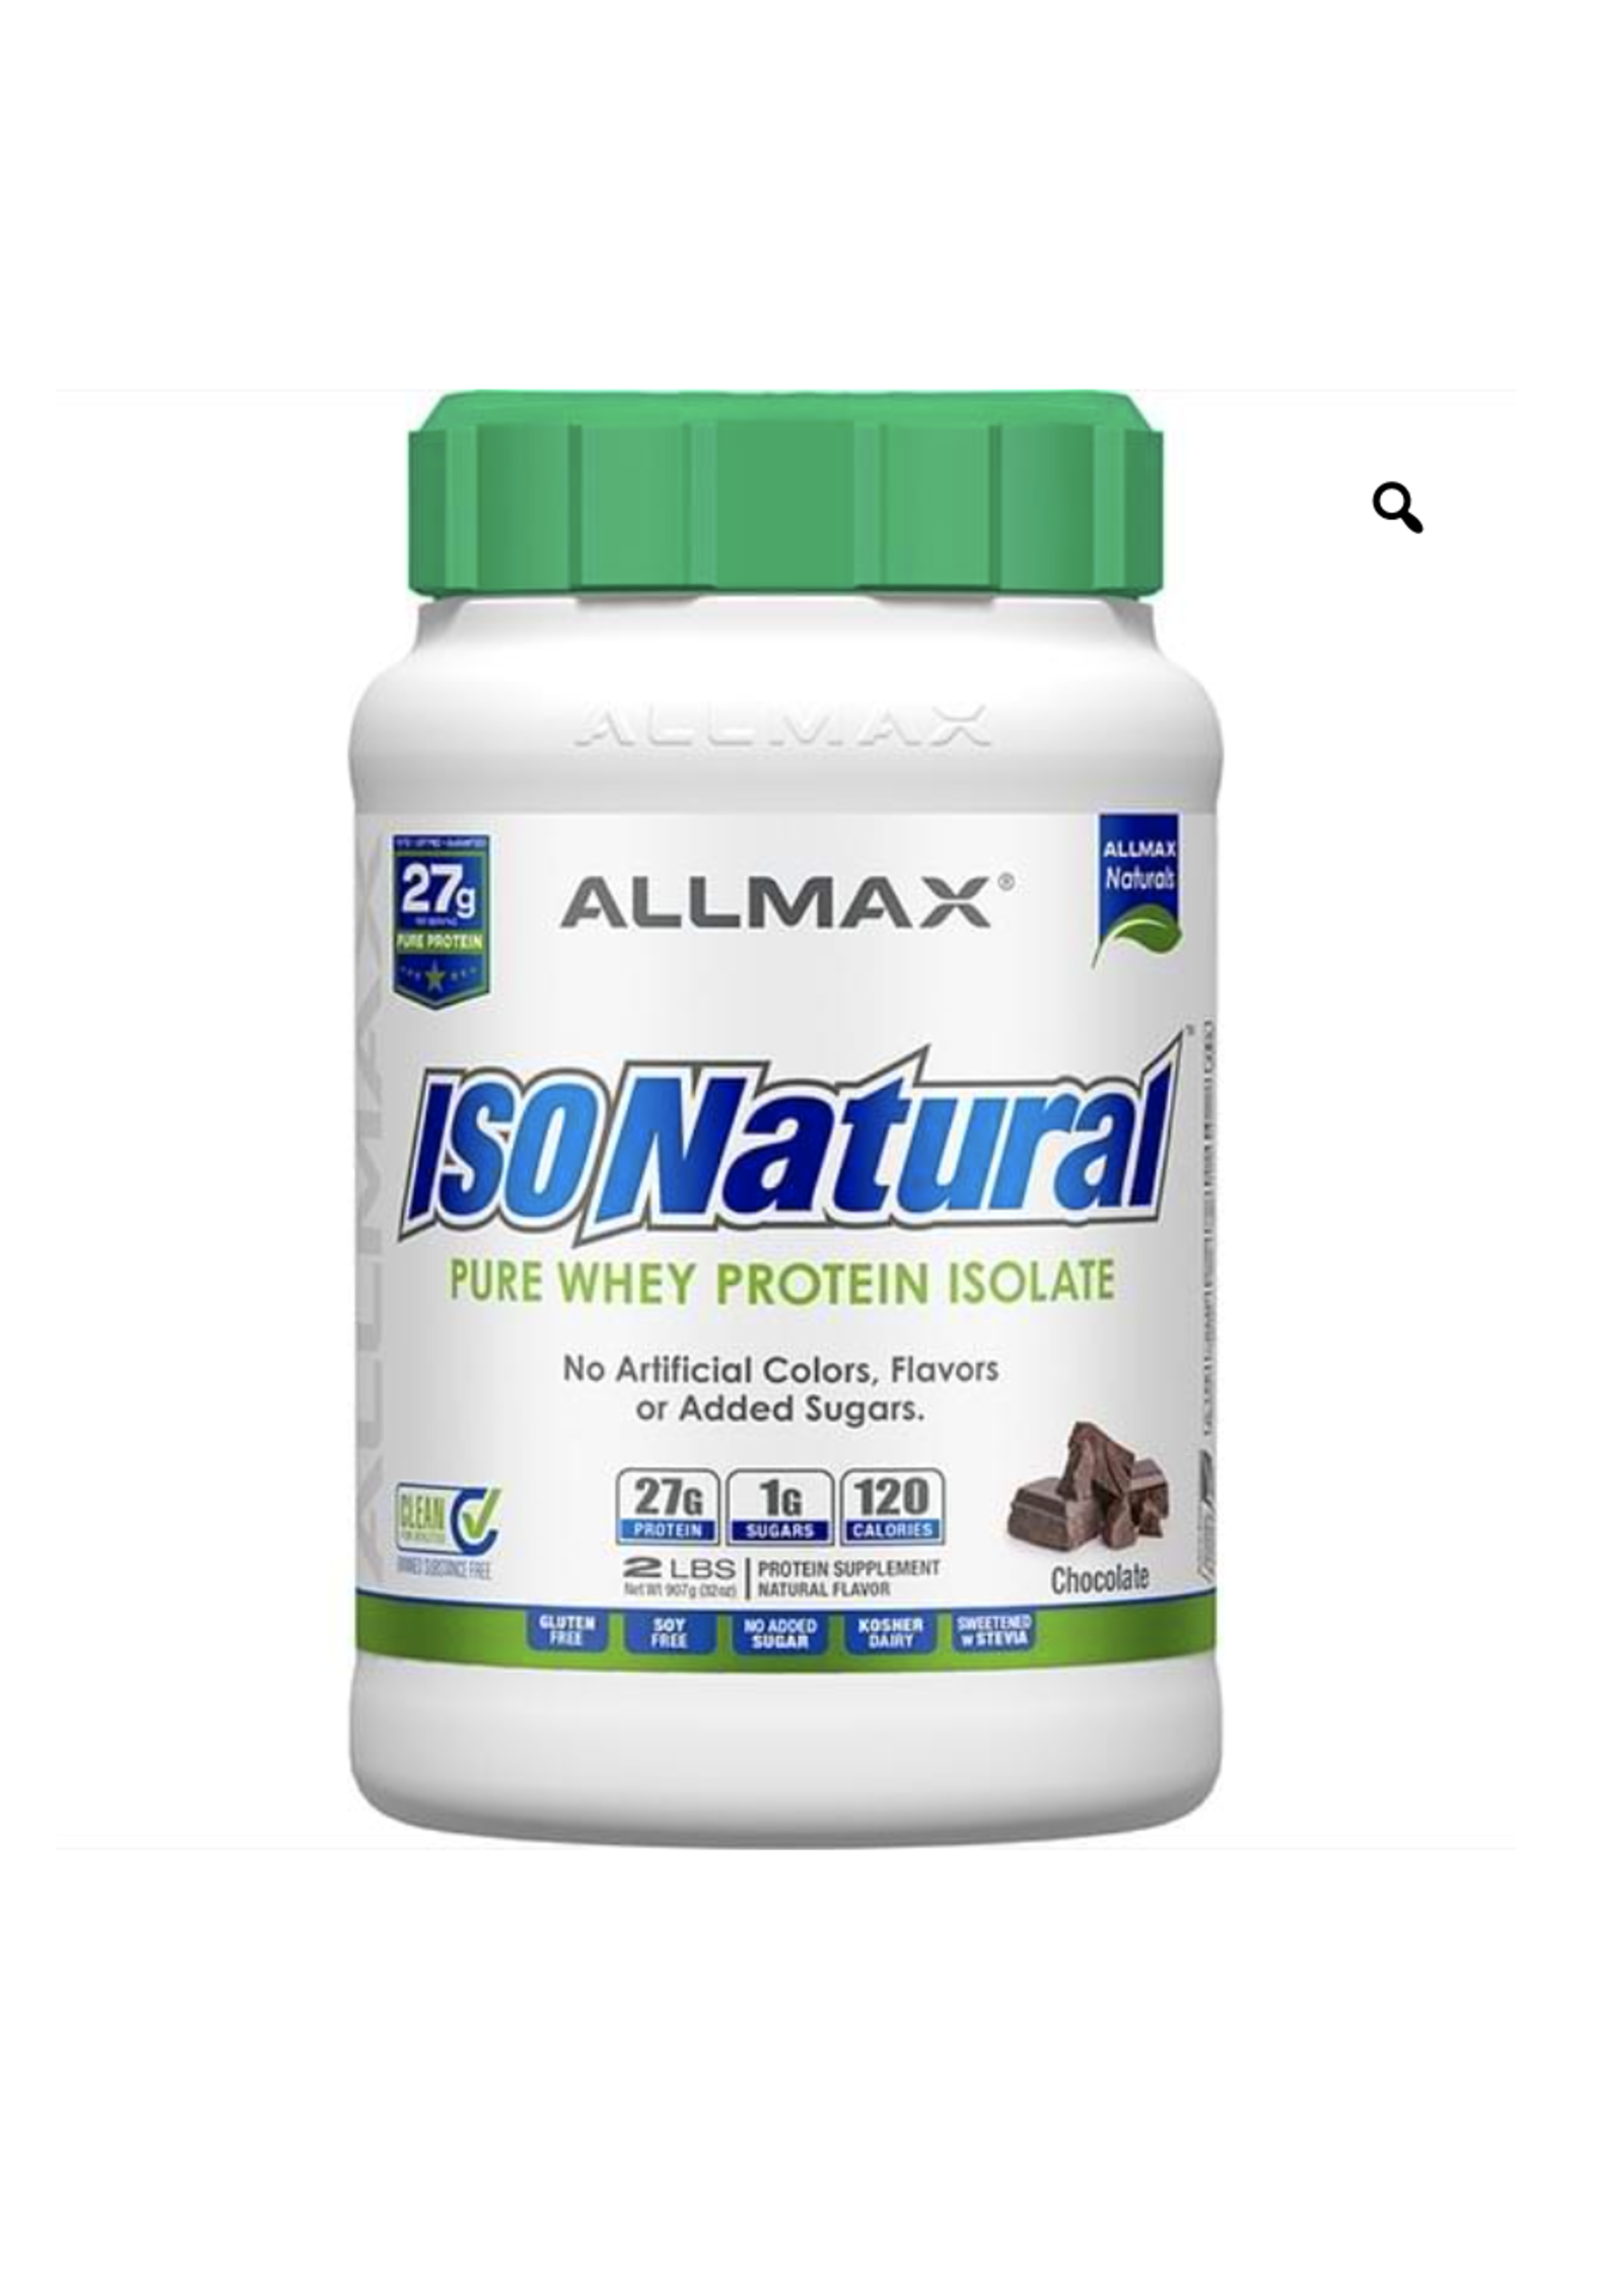 Allmax Nutrition Isonatural